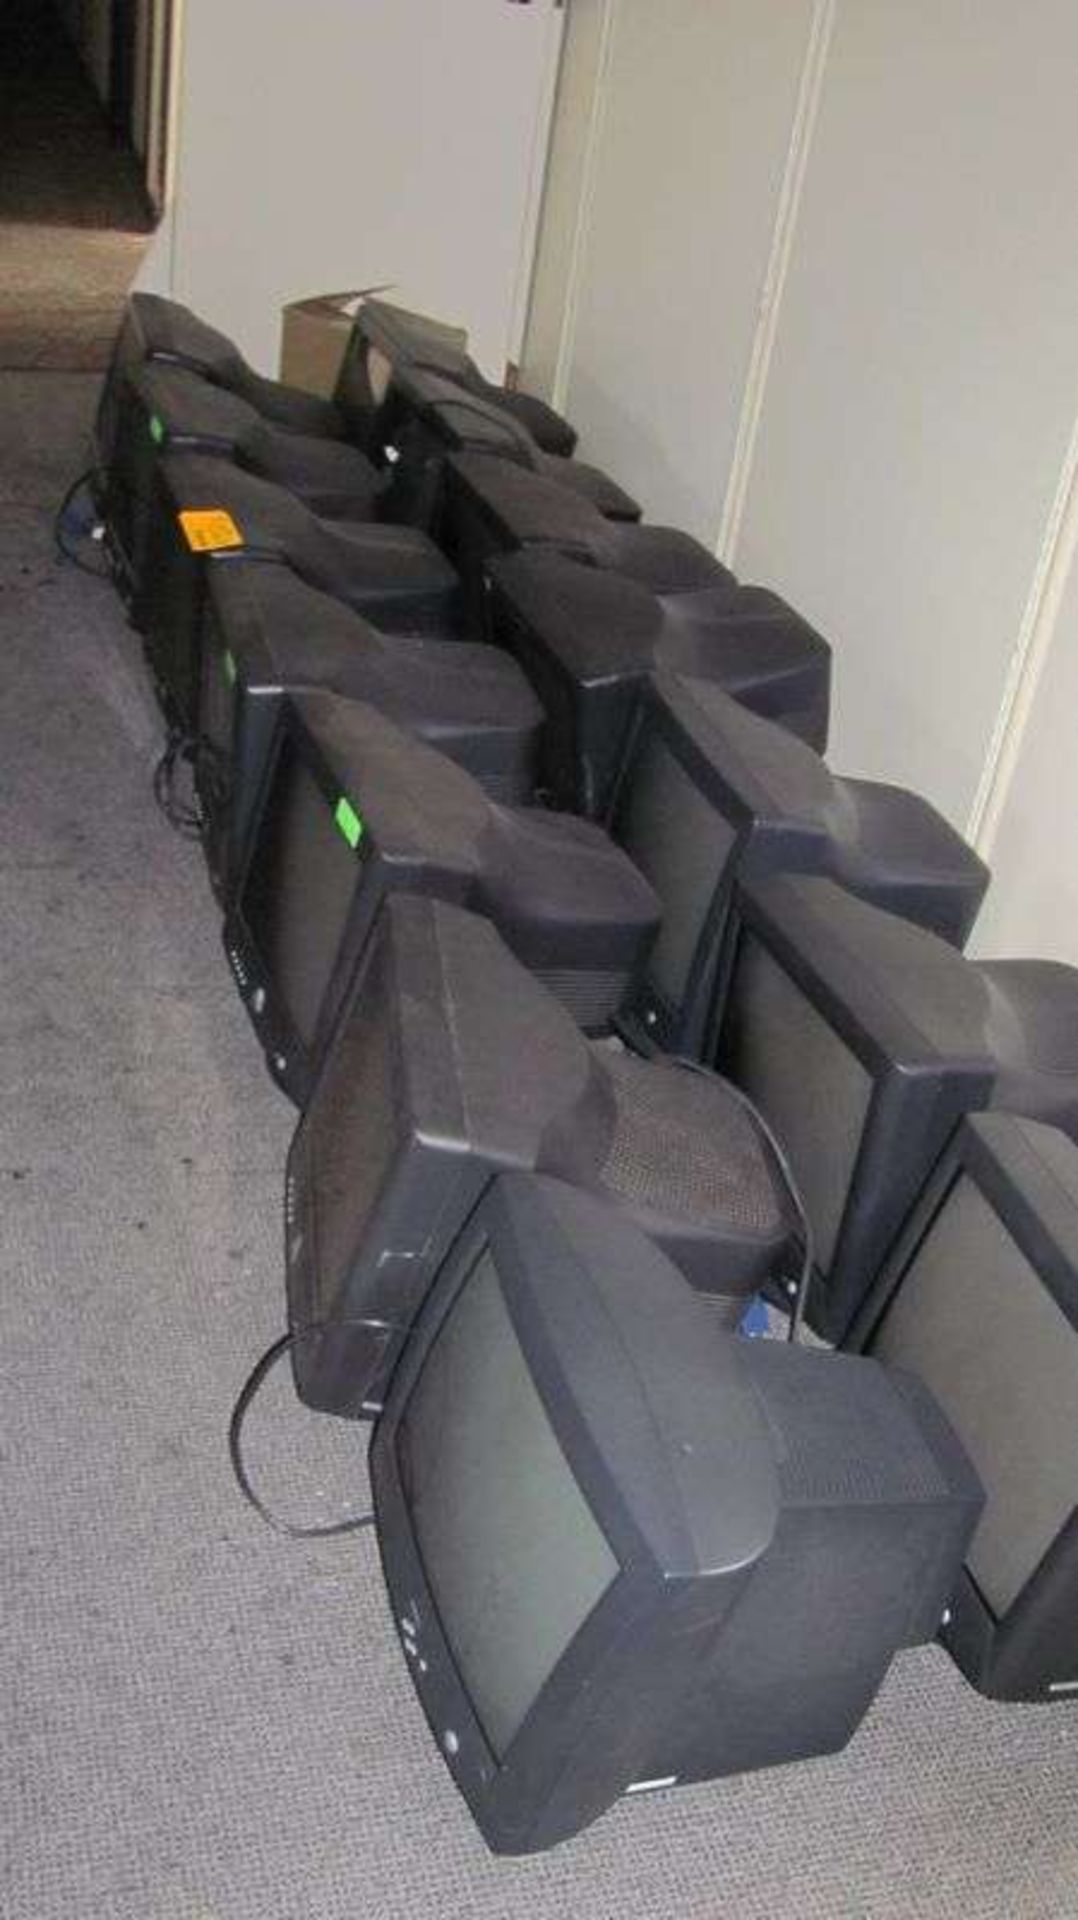 Dell Computer Monitors